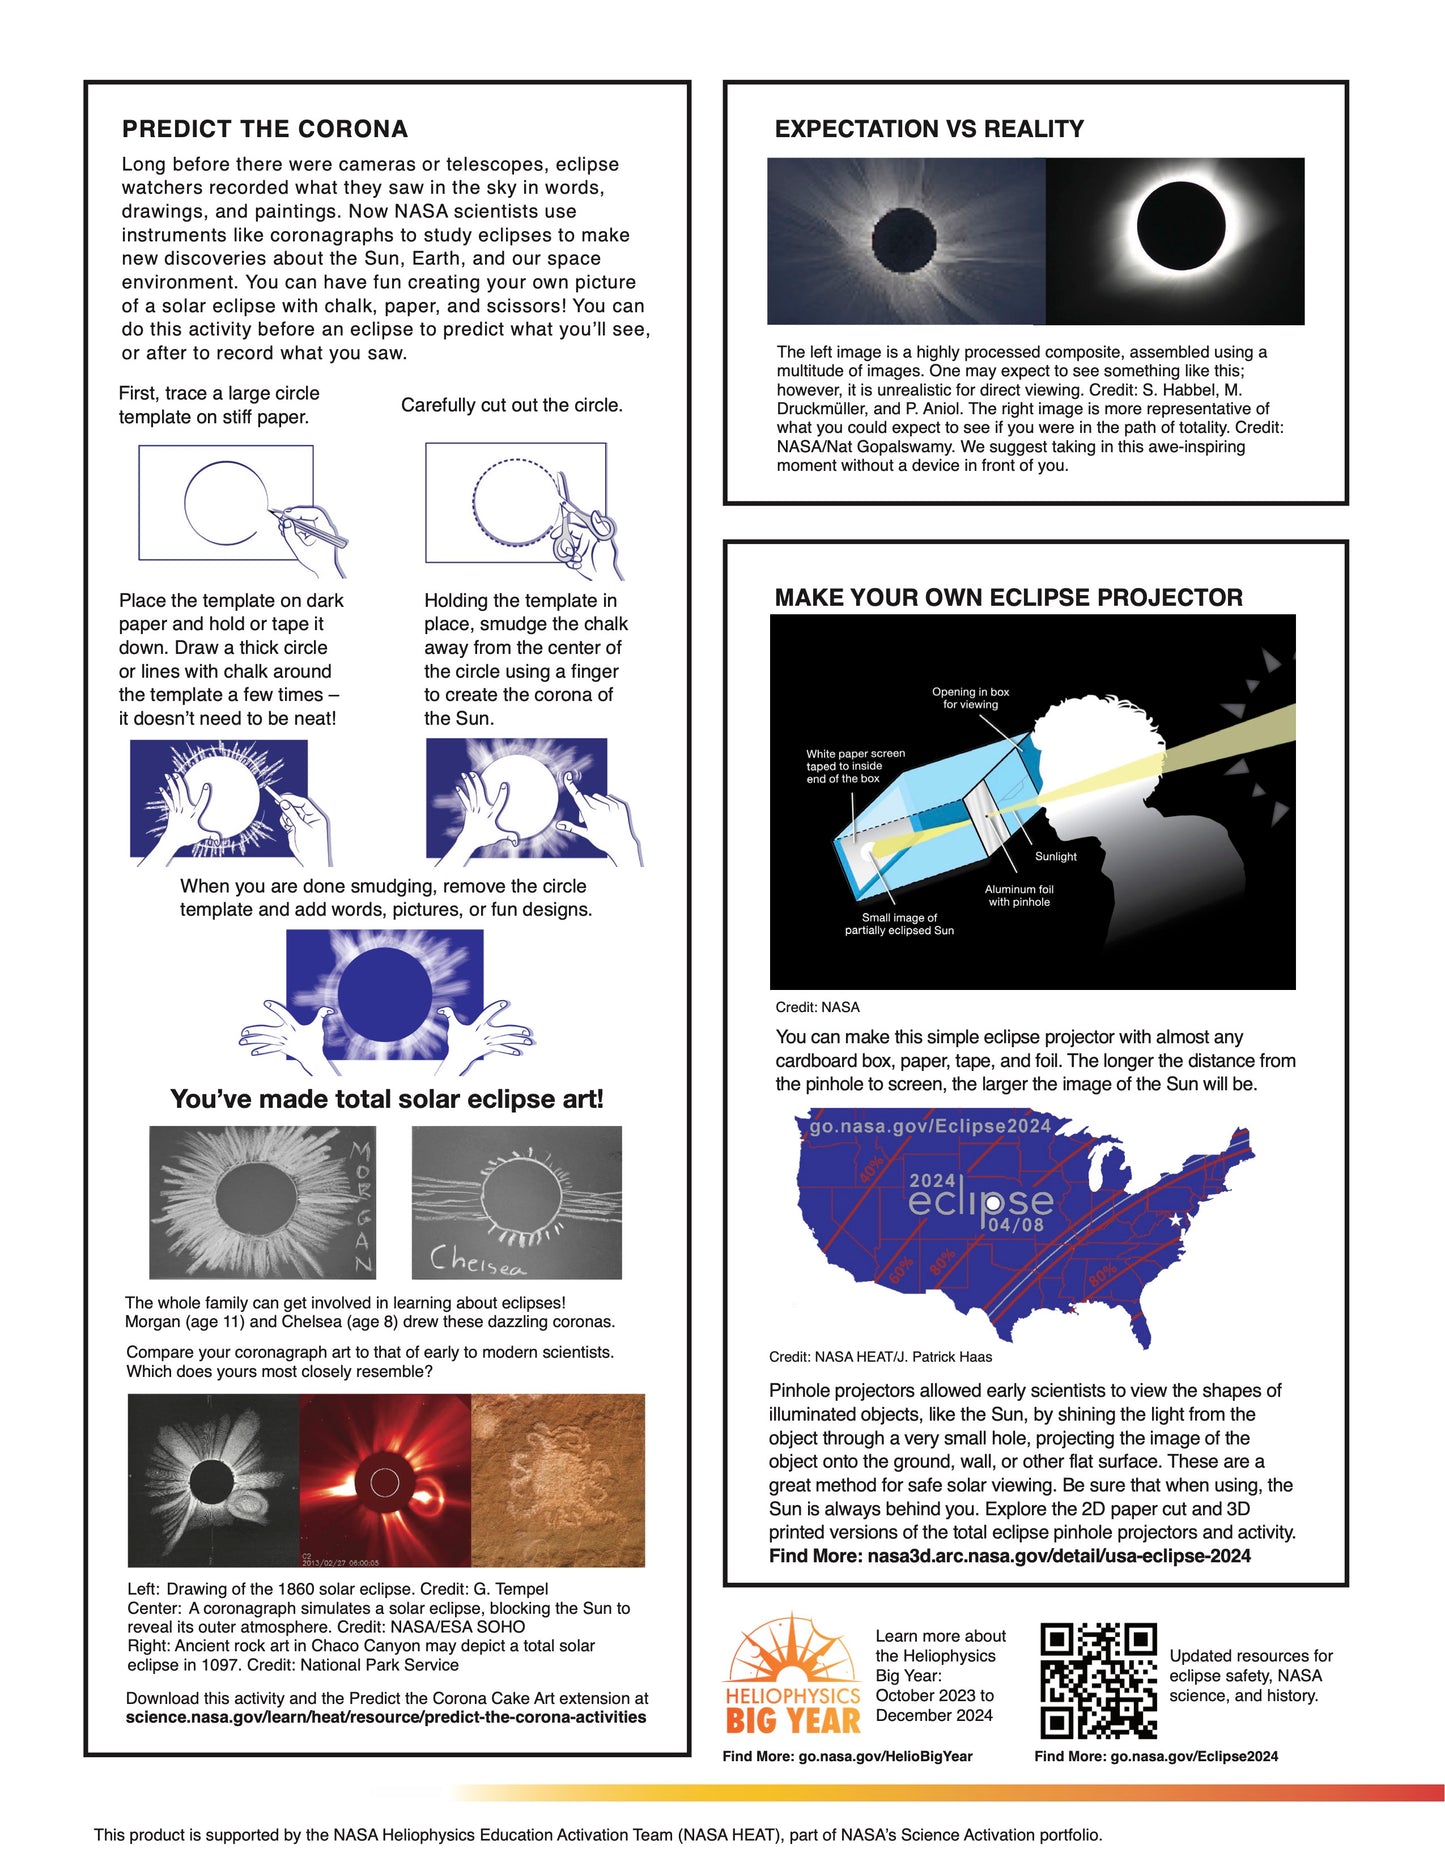 Solar Eclipse Factsheet